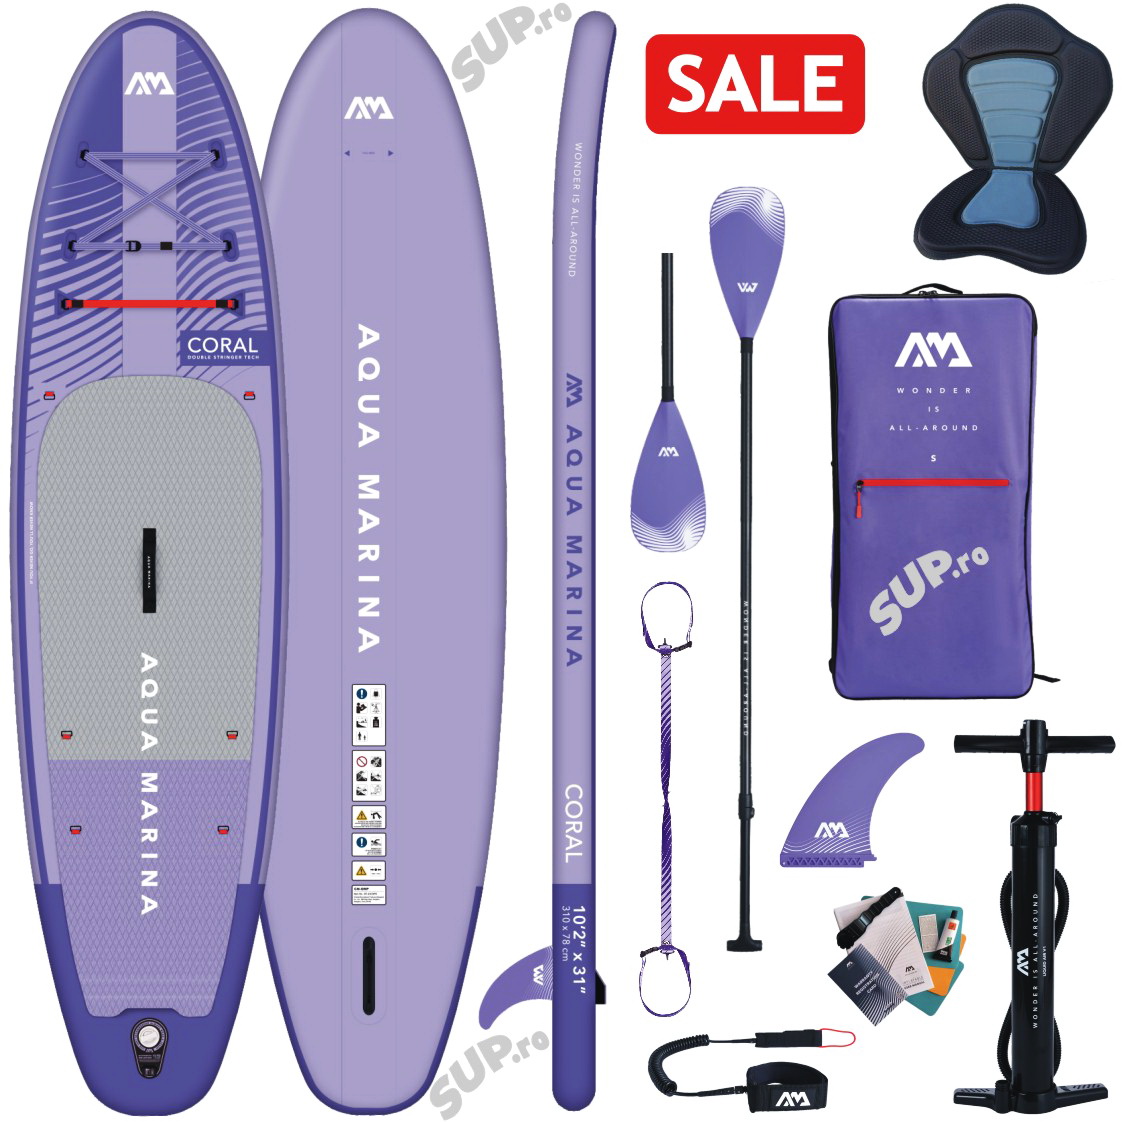 CORAL purple kayak